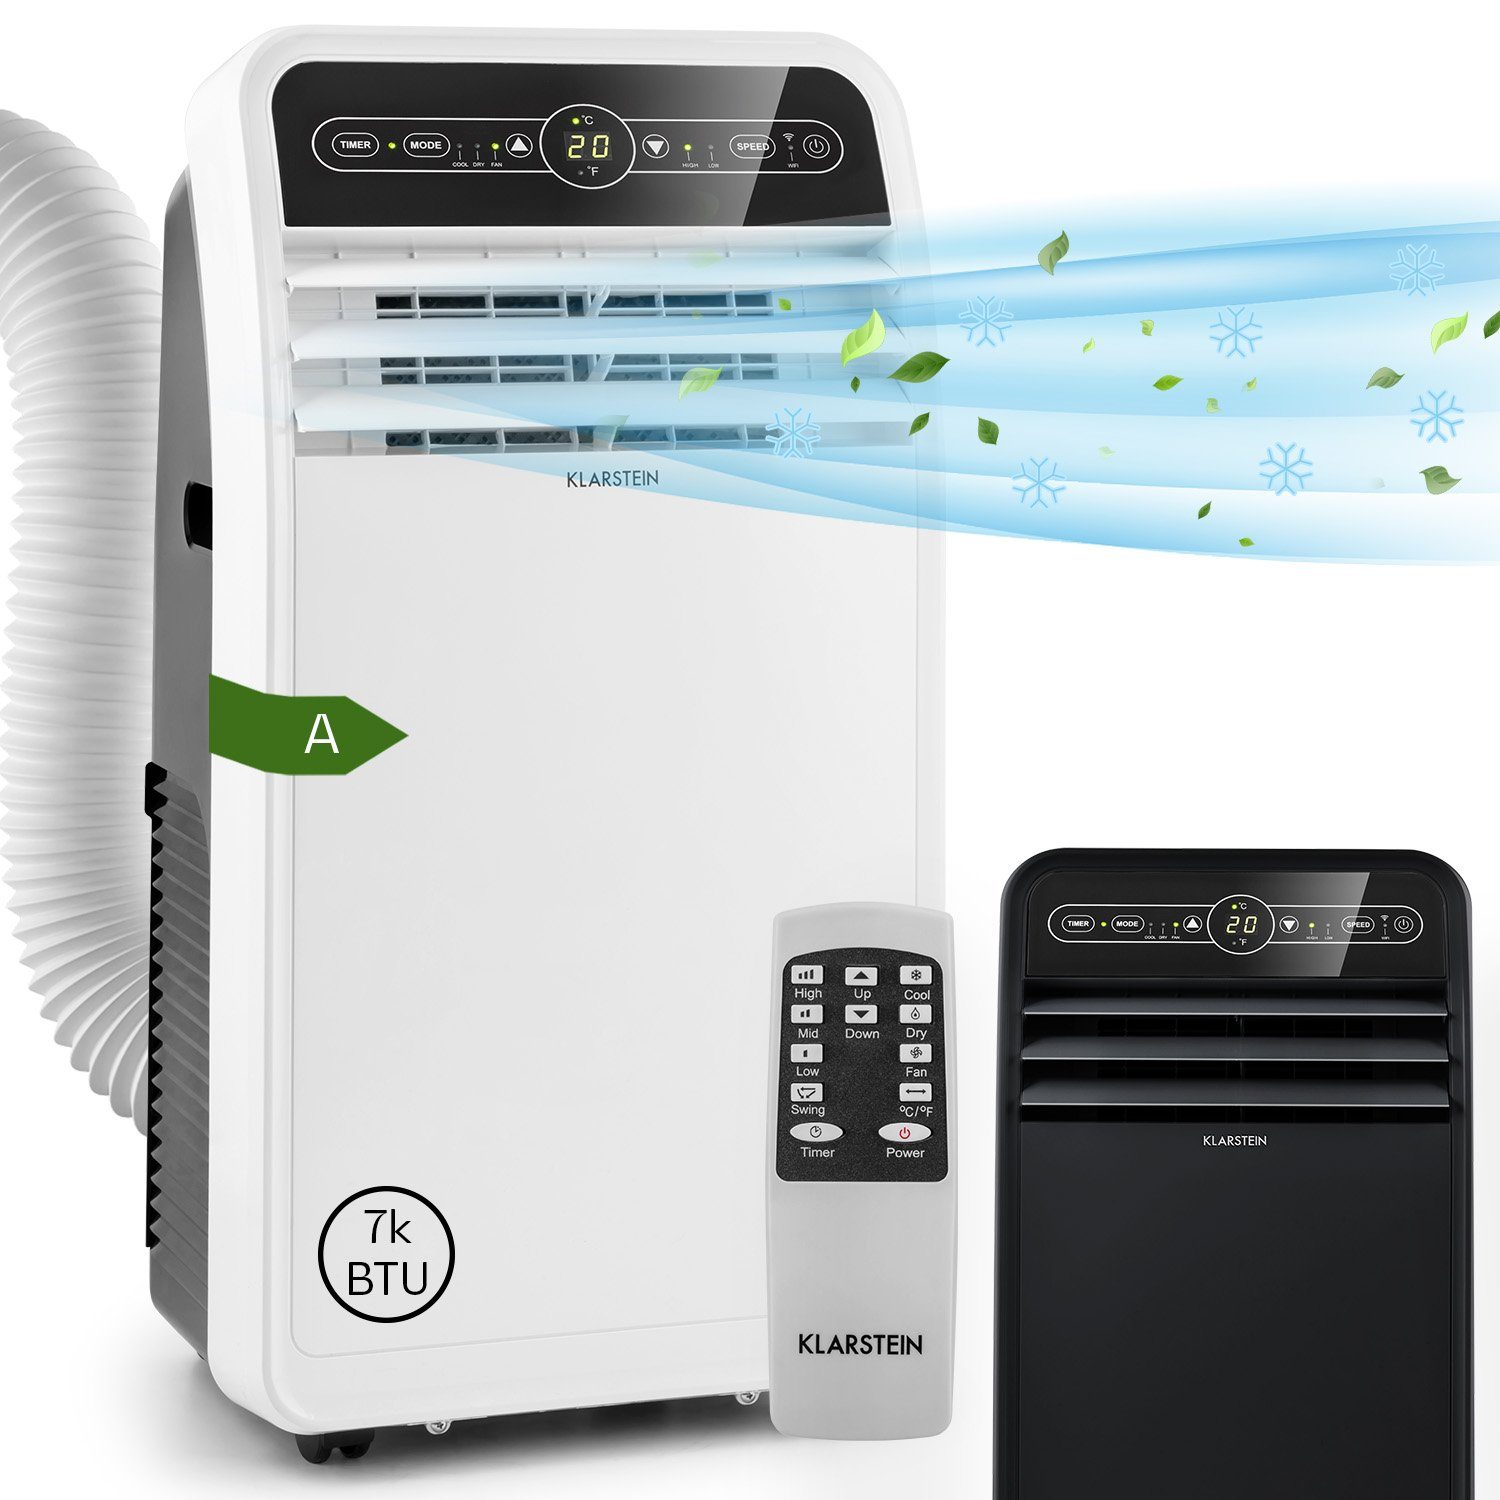 Klarstein Klimagerät Air Klimagerät Kühlgerät mobil Luftkühler Metrobreeze 7K, York Conditioner New